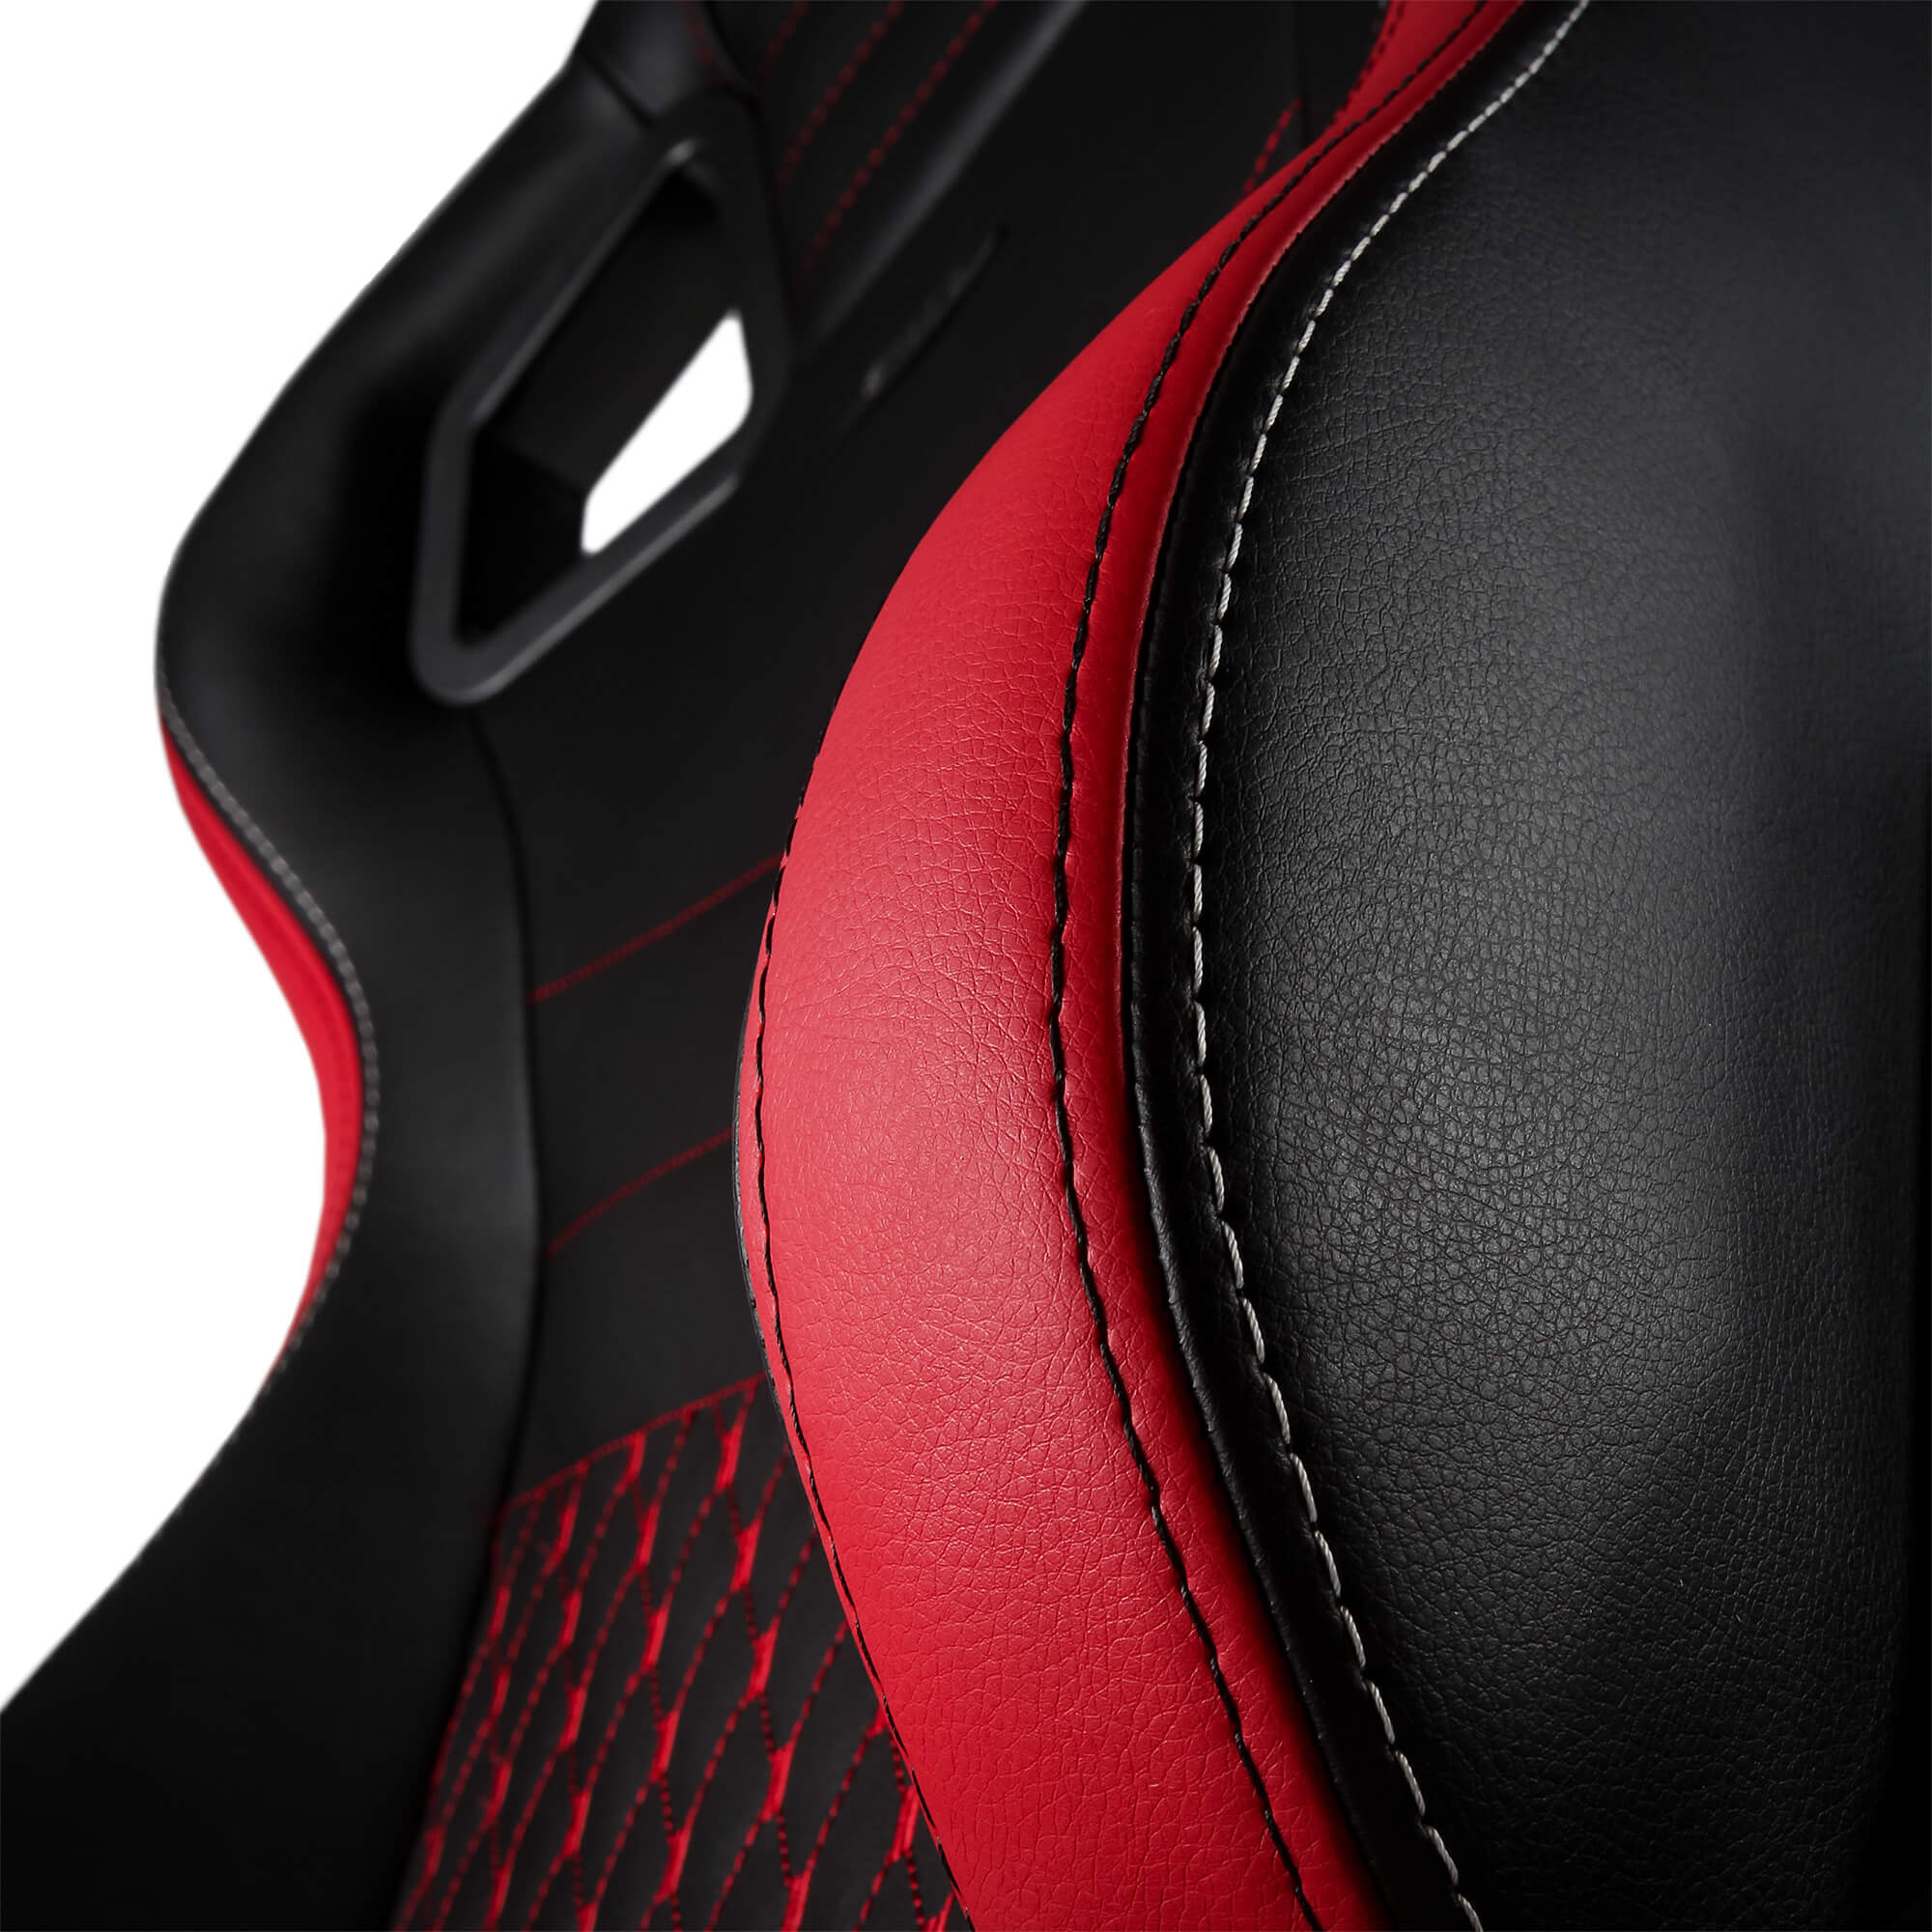 noblechairs - ** B Grade ** Cadeira noblechairs EPIC PU Leather mousesports Edition Preto / Vermelho